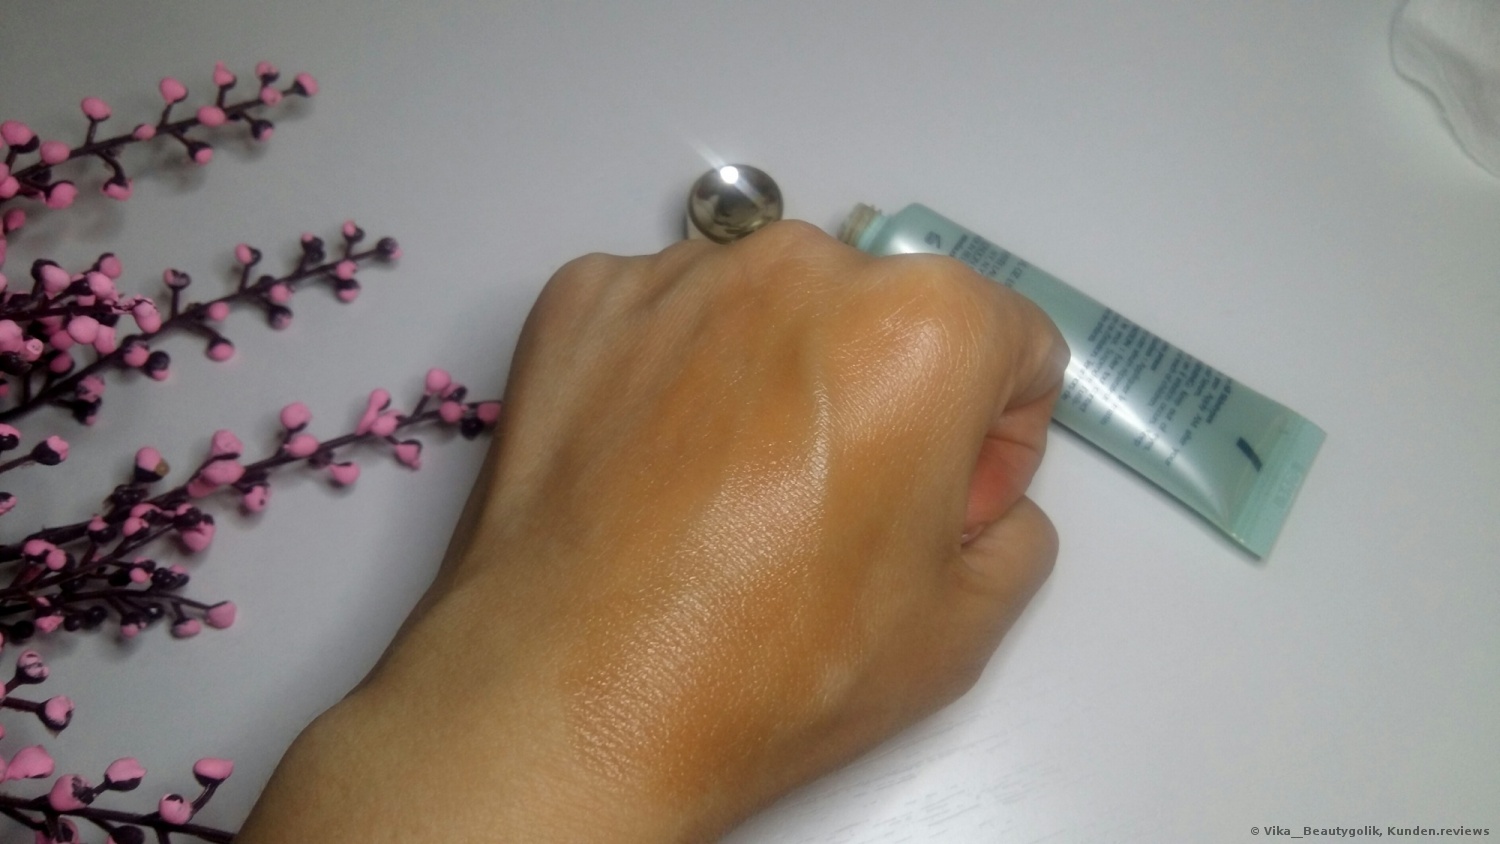  Estee Lauder DayWear Multi-Protection Anti-Oxidant Sheer Tint Release Moisturizer SPF 15